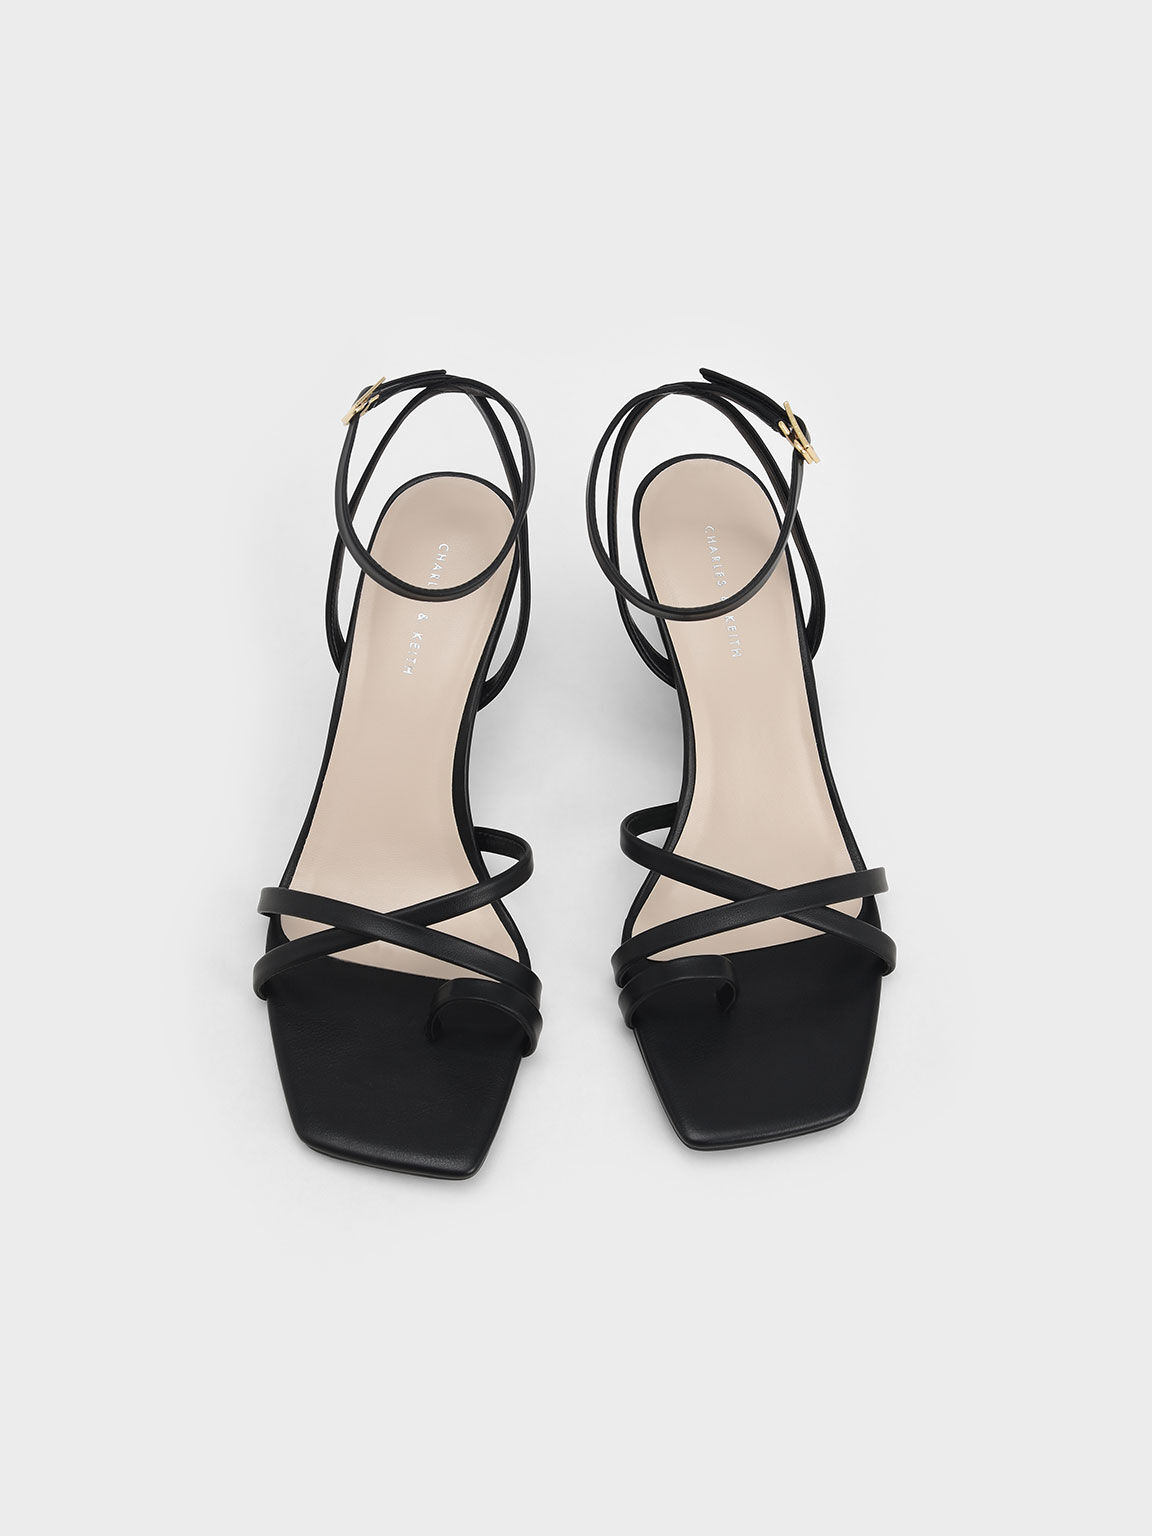 Toe Loop Strappy Heeled Sandals, Black, hi-res